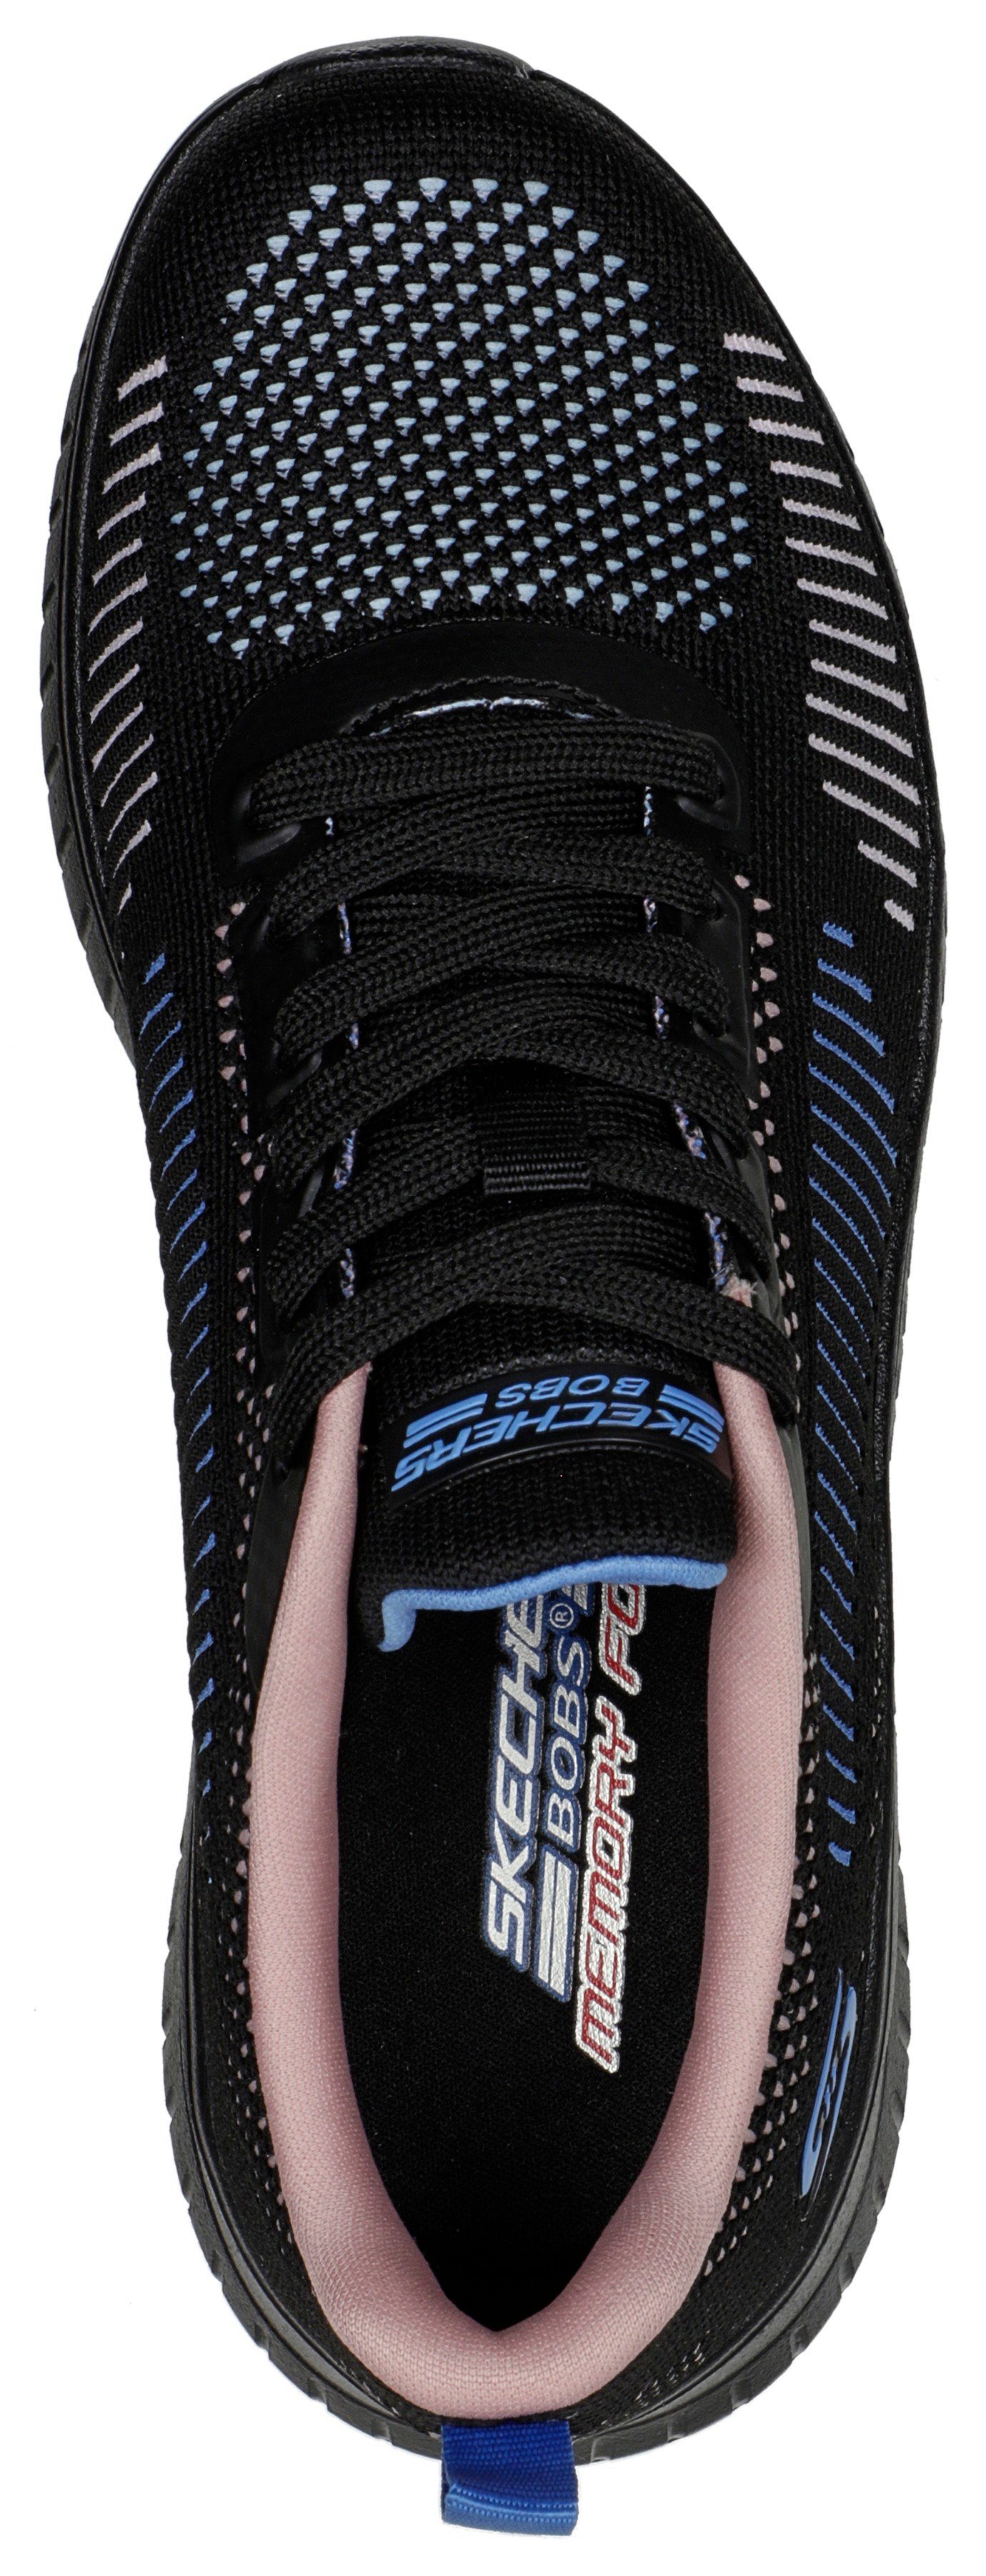 Skechers BOBS SQUAD toller CHAOS Farbkombi schwarz-kombiniert CRUSH Sneaker in COLOR